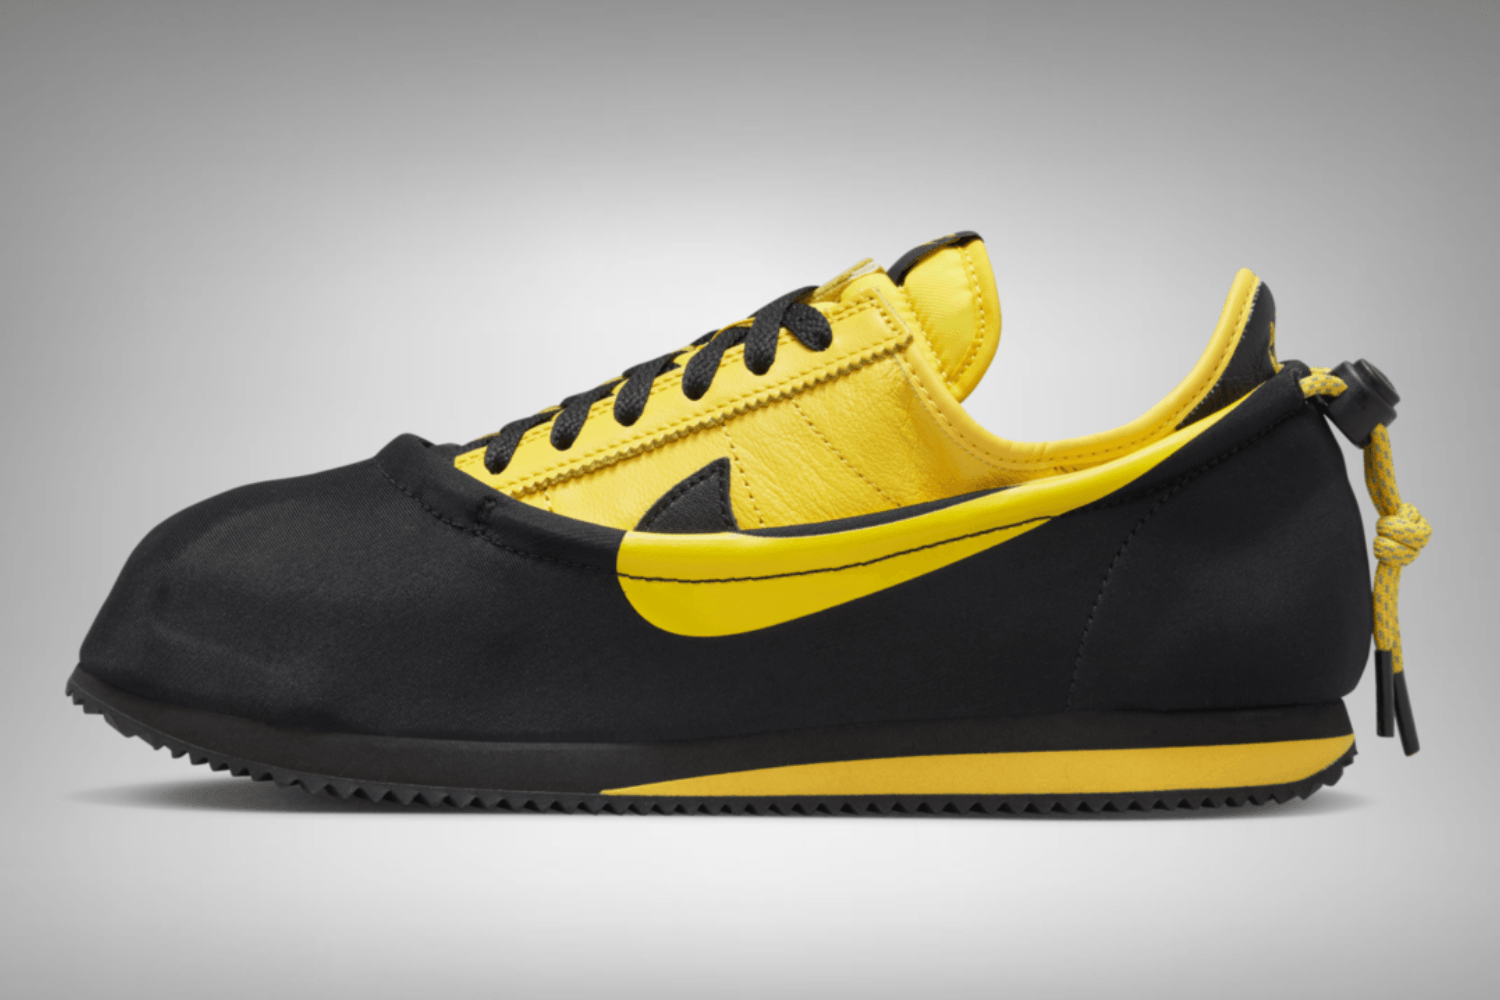 CLOT x Nike komen met 'Bruce Lee' Clotez